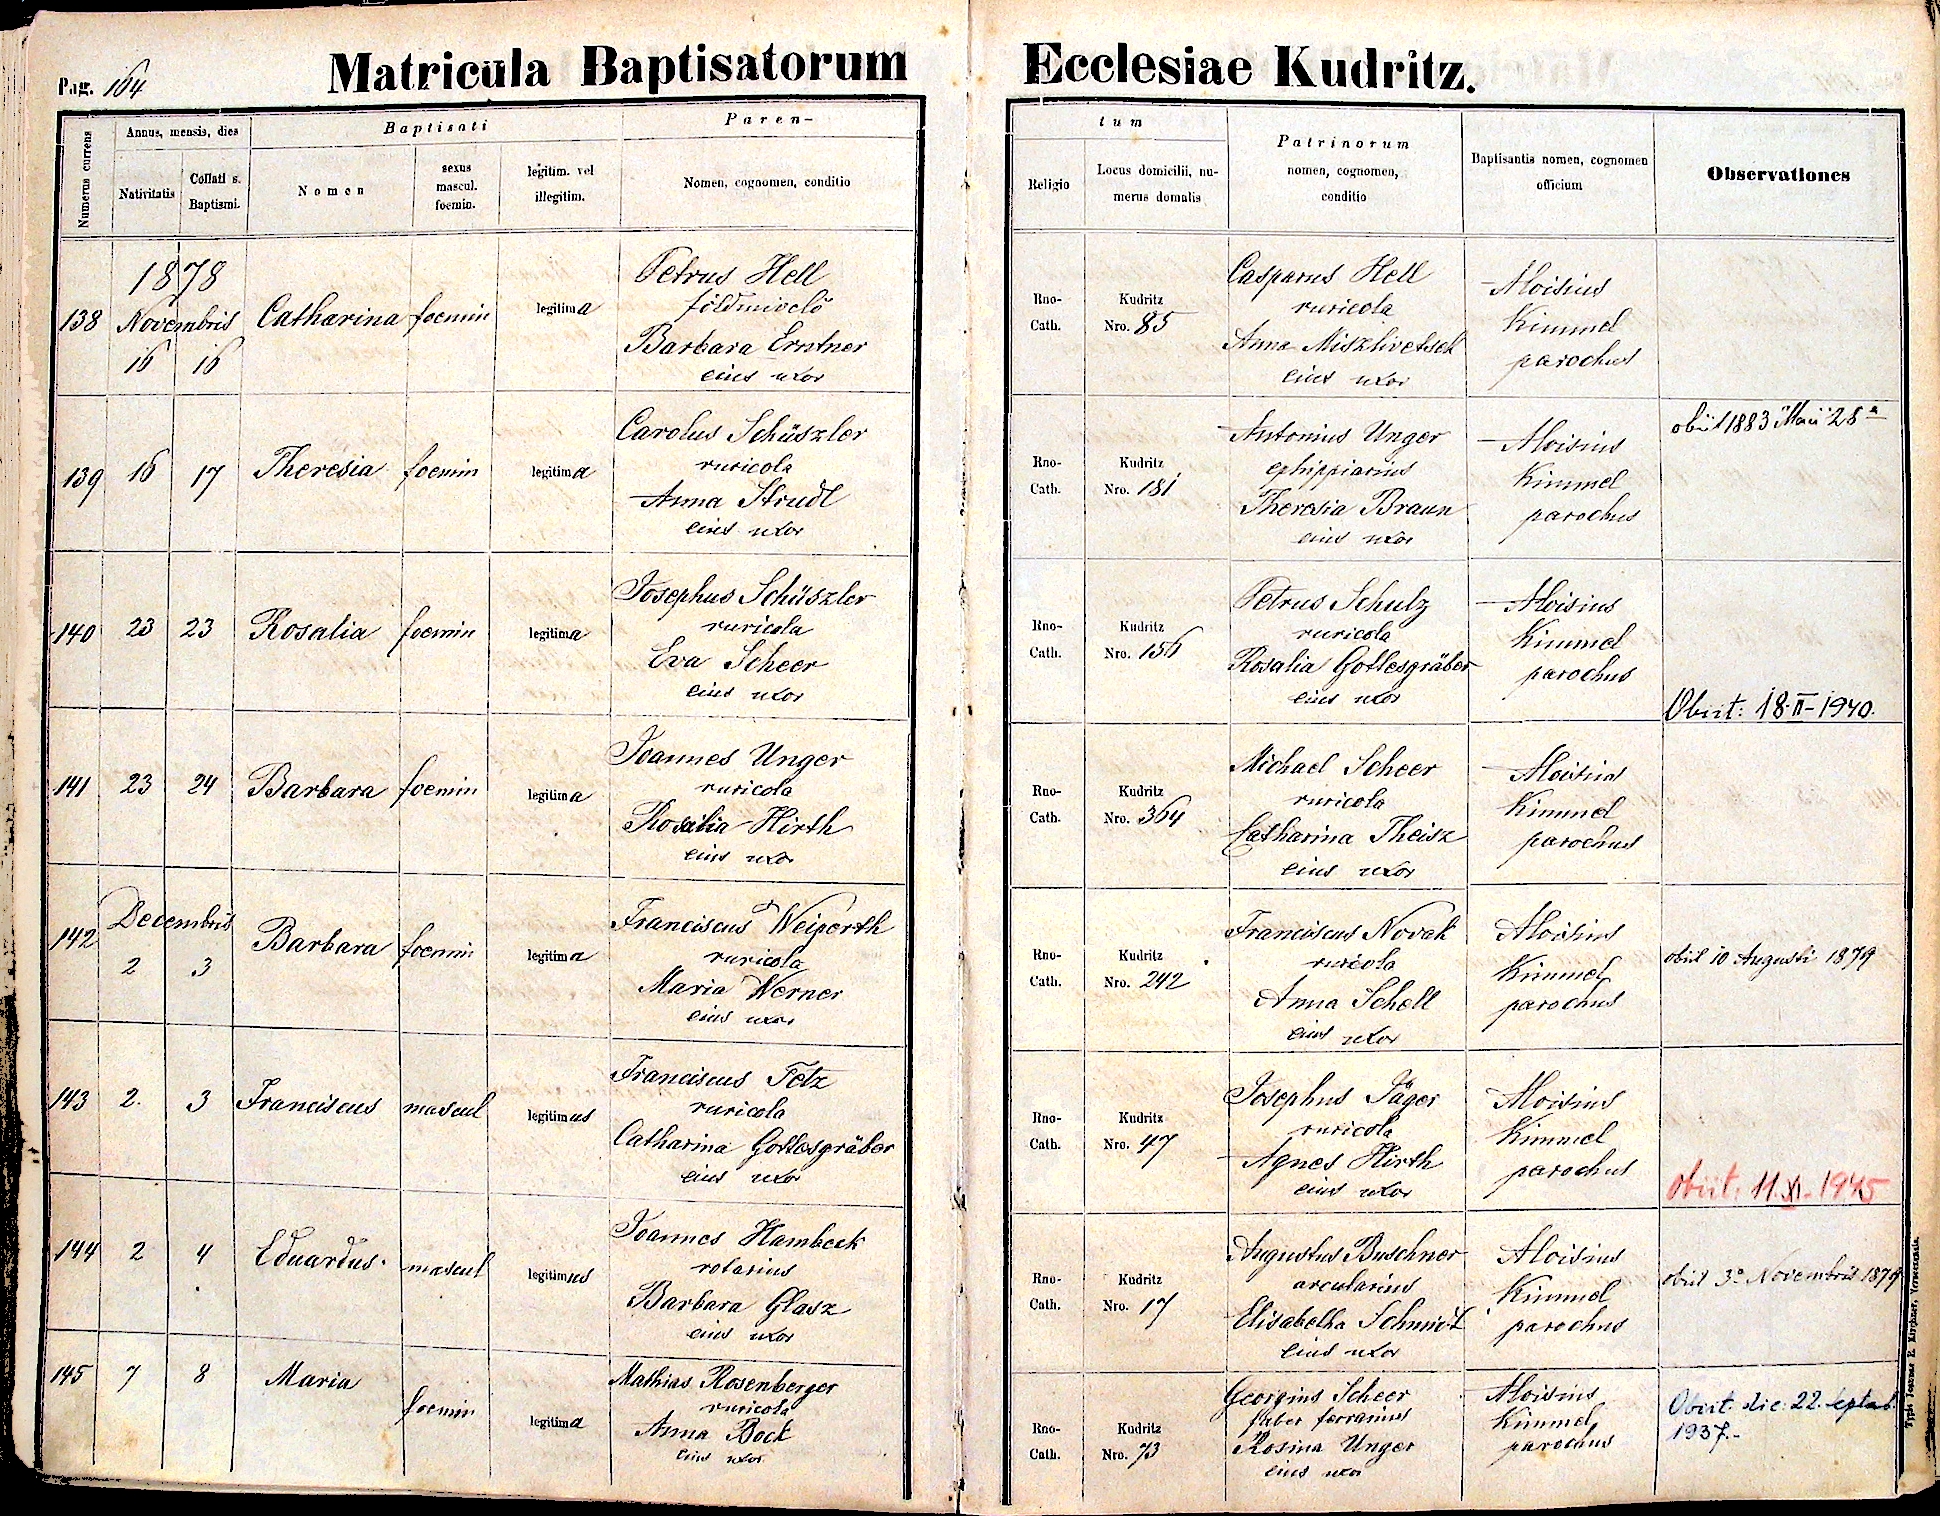 images/church_records/BIRTHS/1884-1899B/1895/164